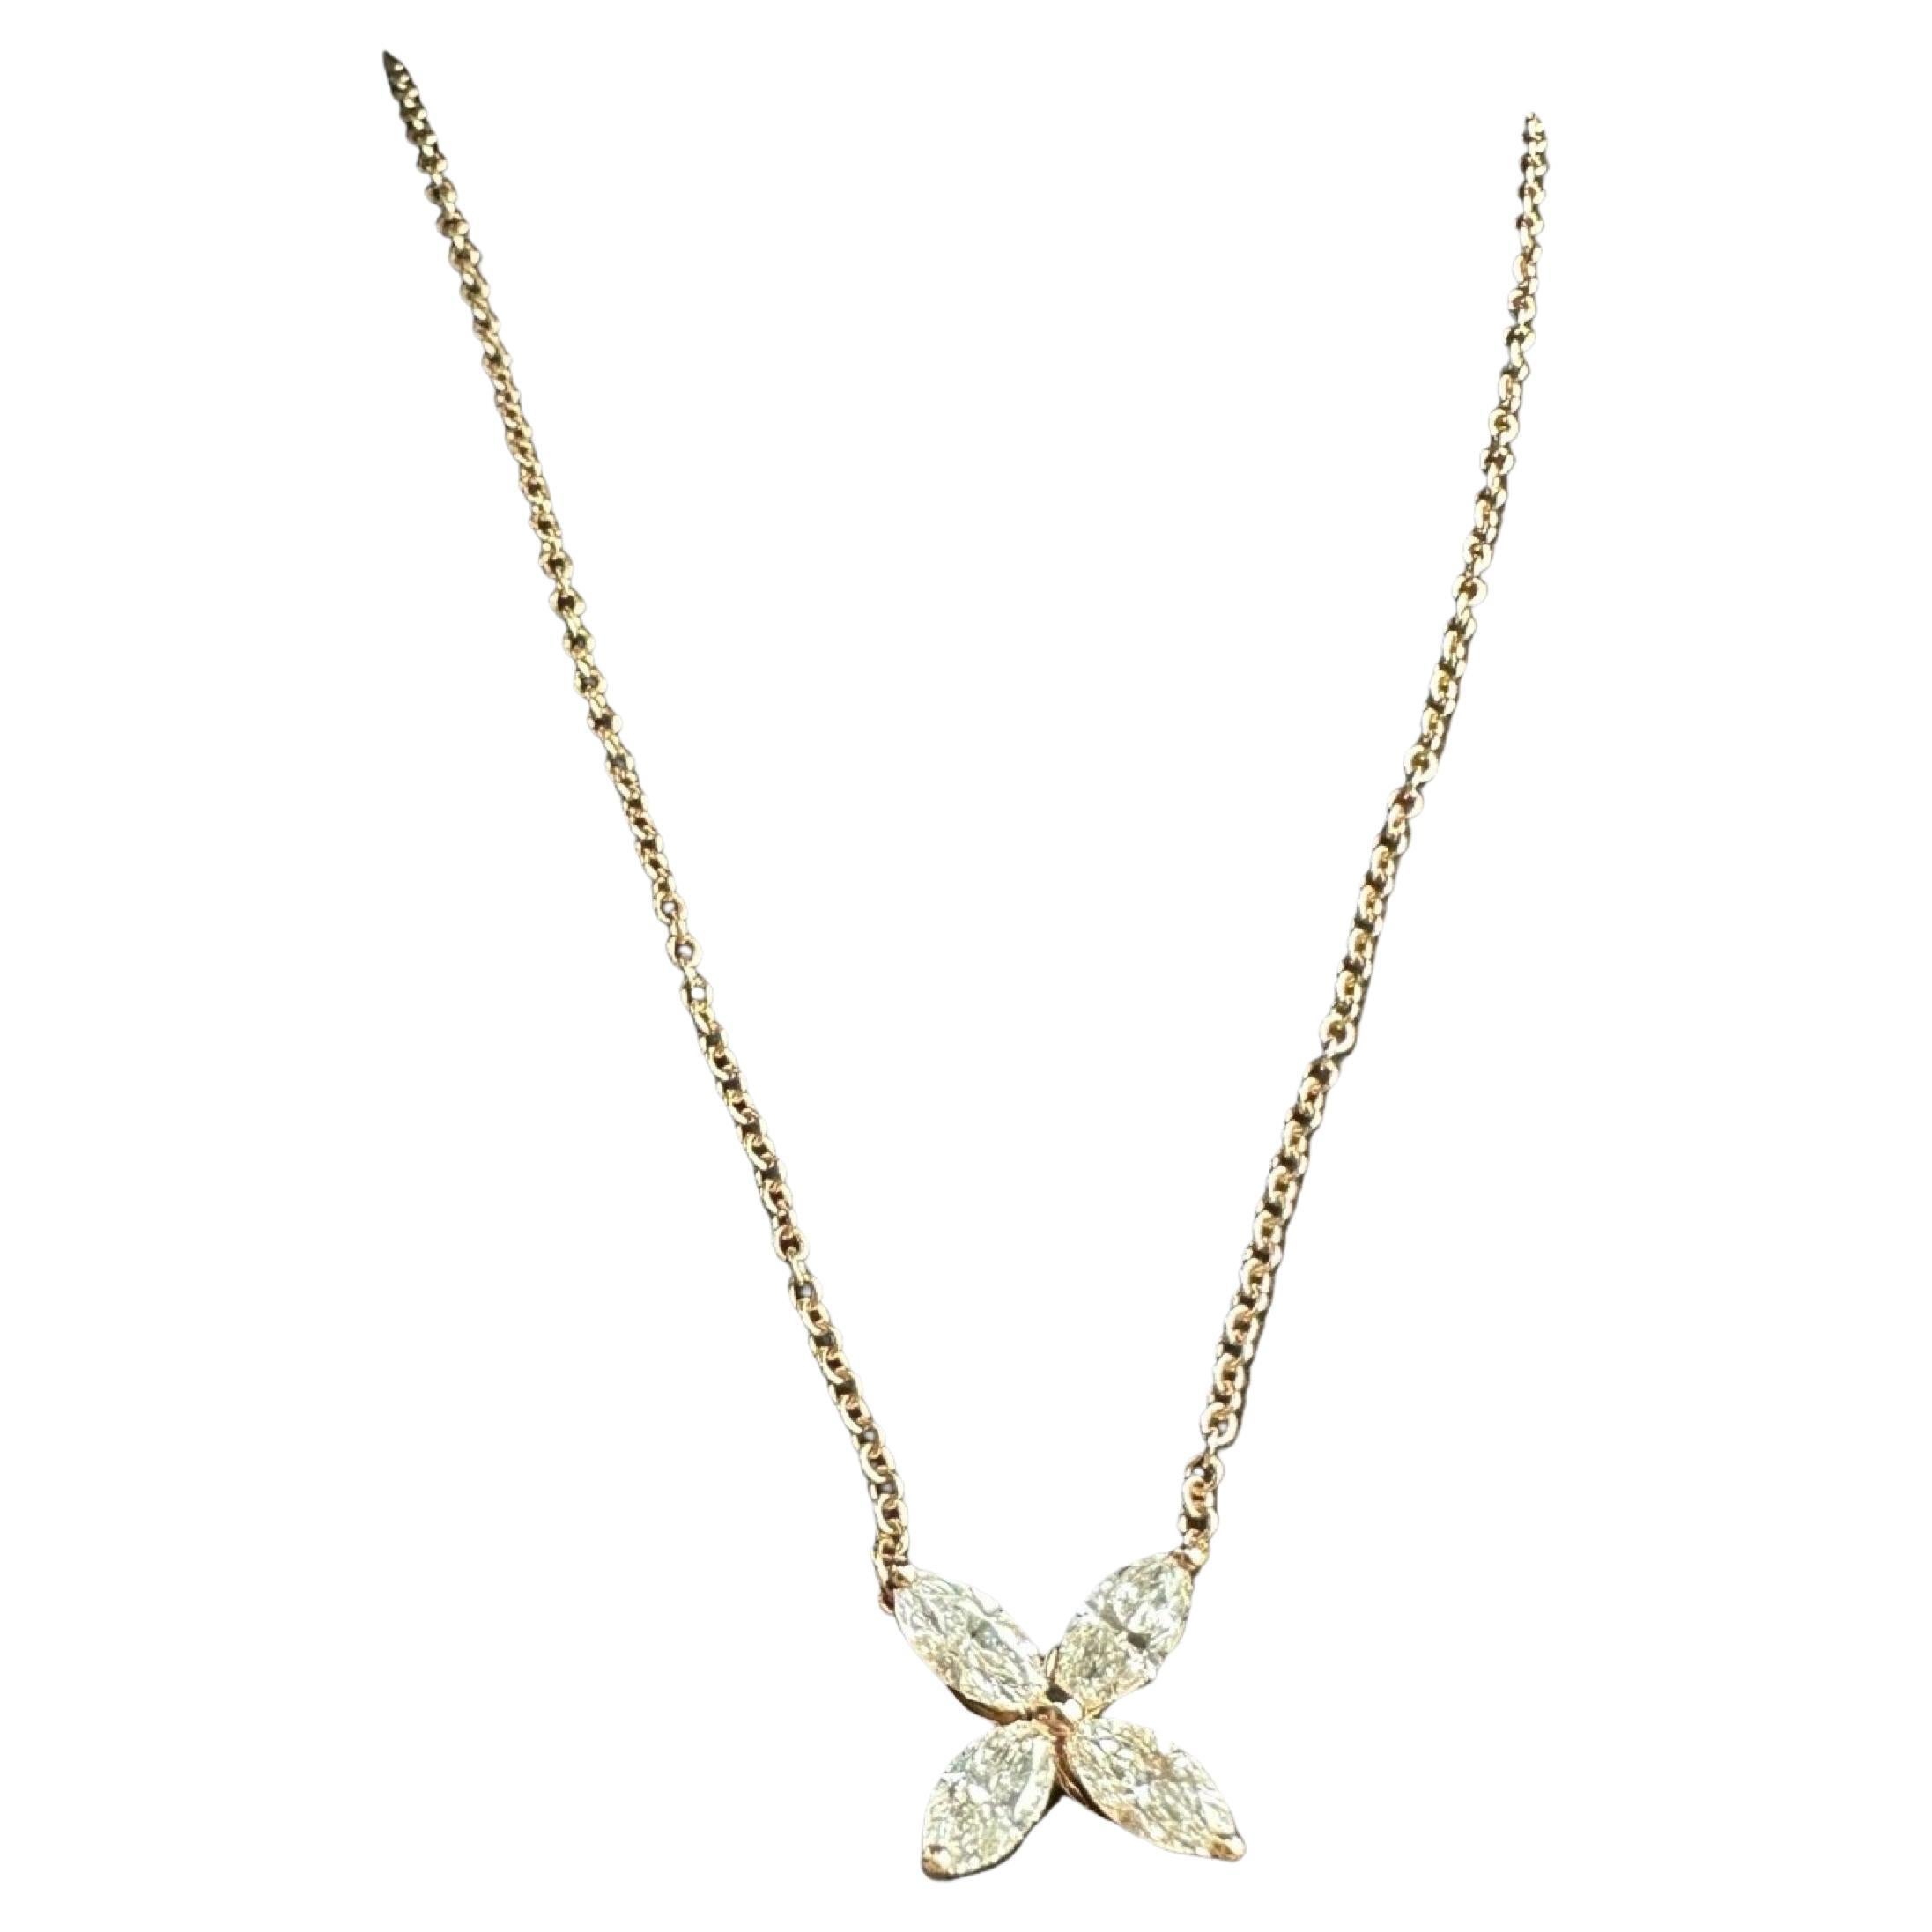 Tiffany Co Victoria necklace in rose 18k gold, medium